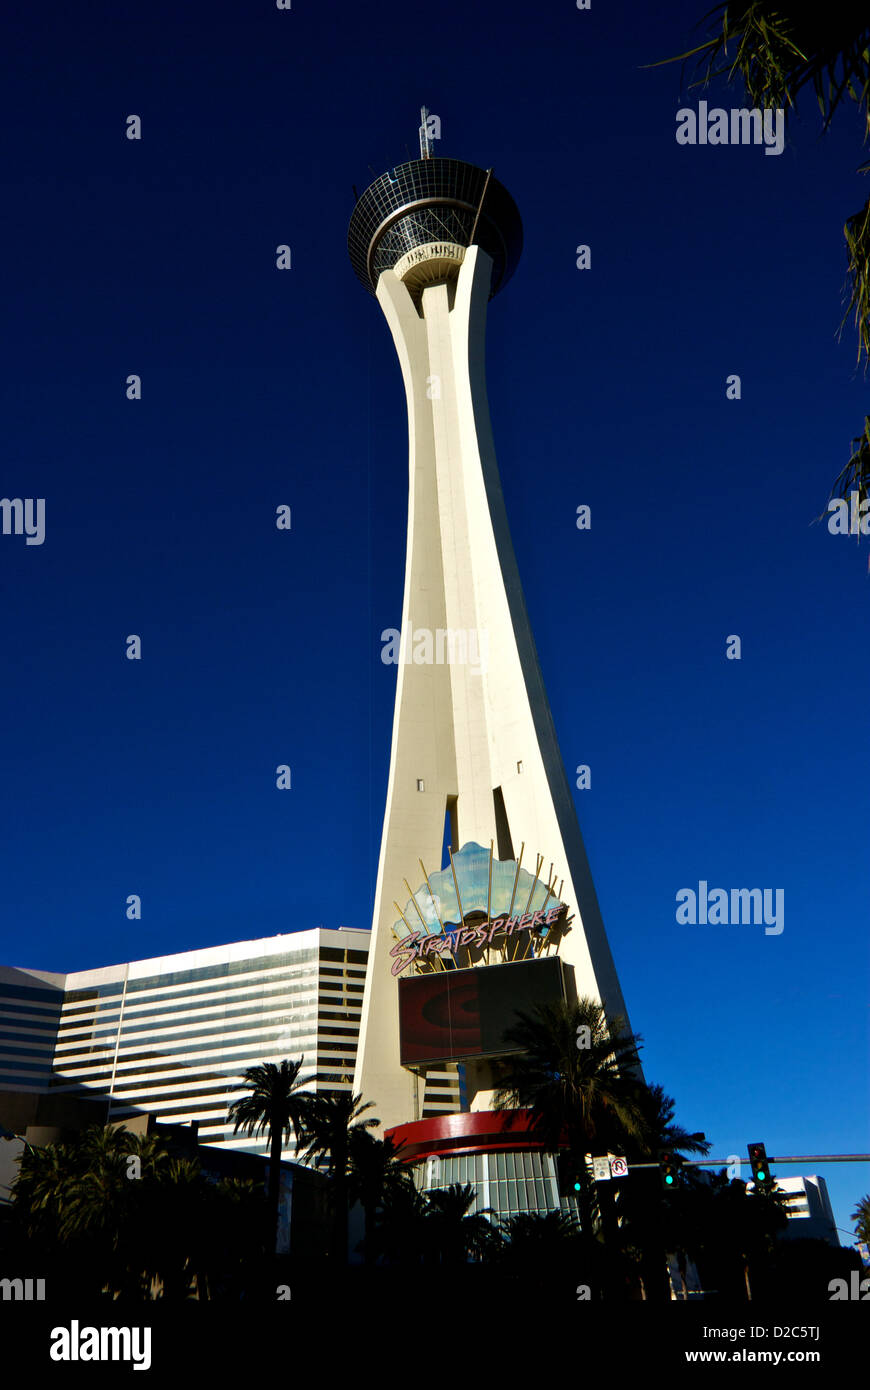 Adrenaline at Las Vegas Stratosphere Tower Stock Image - Image of night,  adrenaline: 122755291